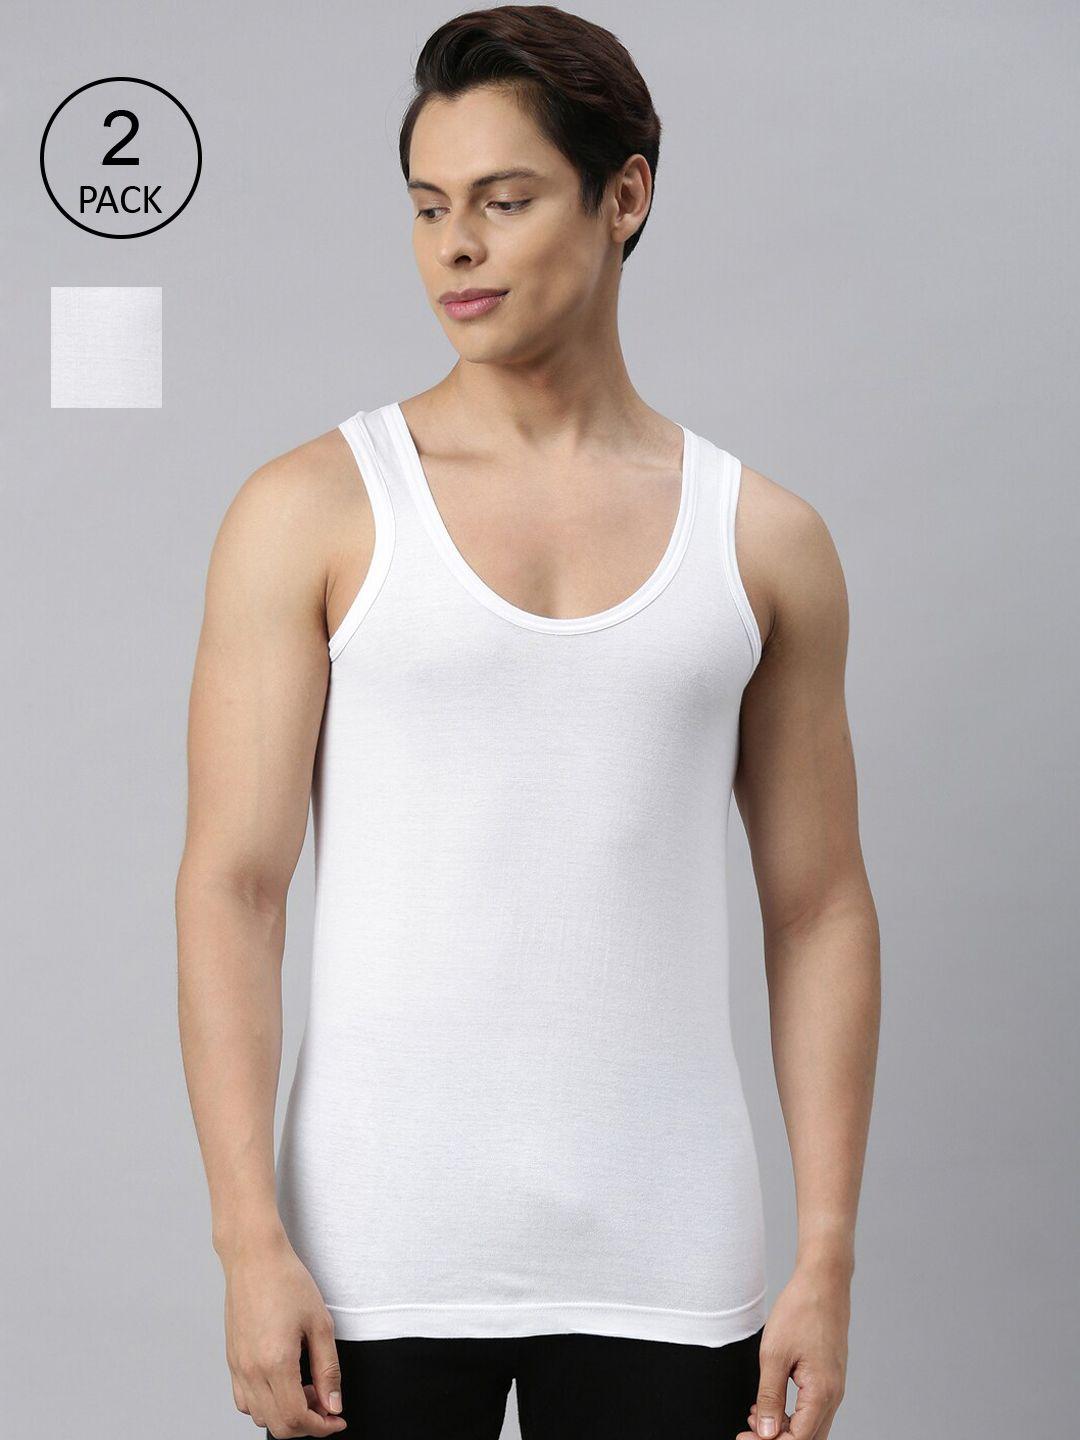 vip men pack of 2 white pure cotton innerwear vests